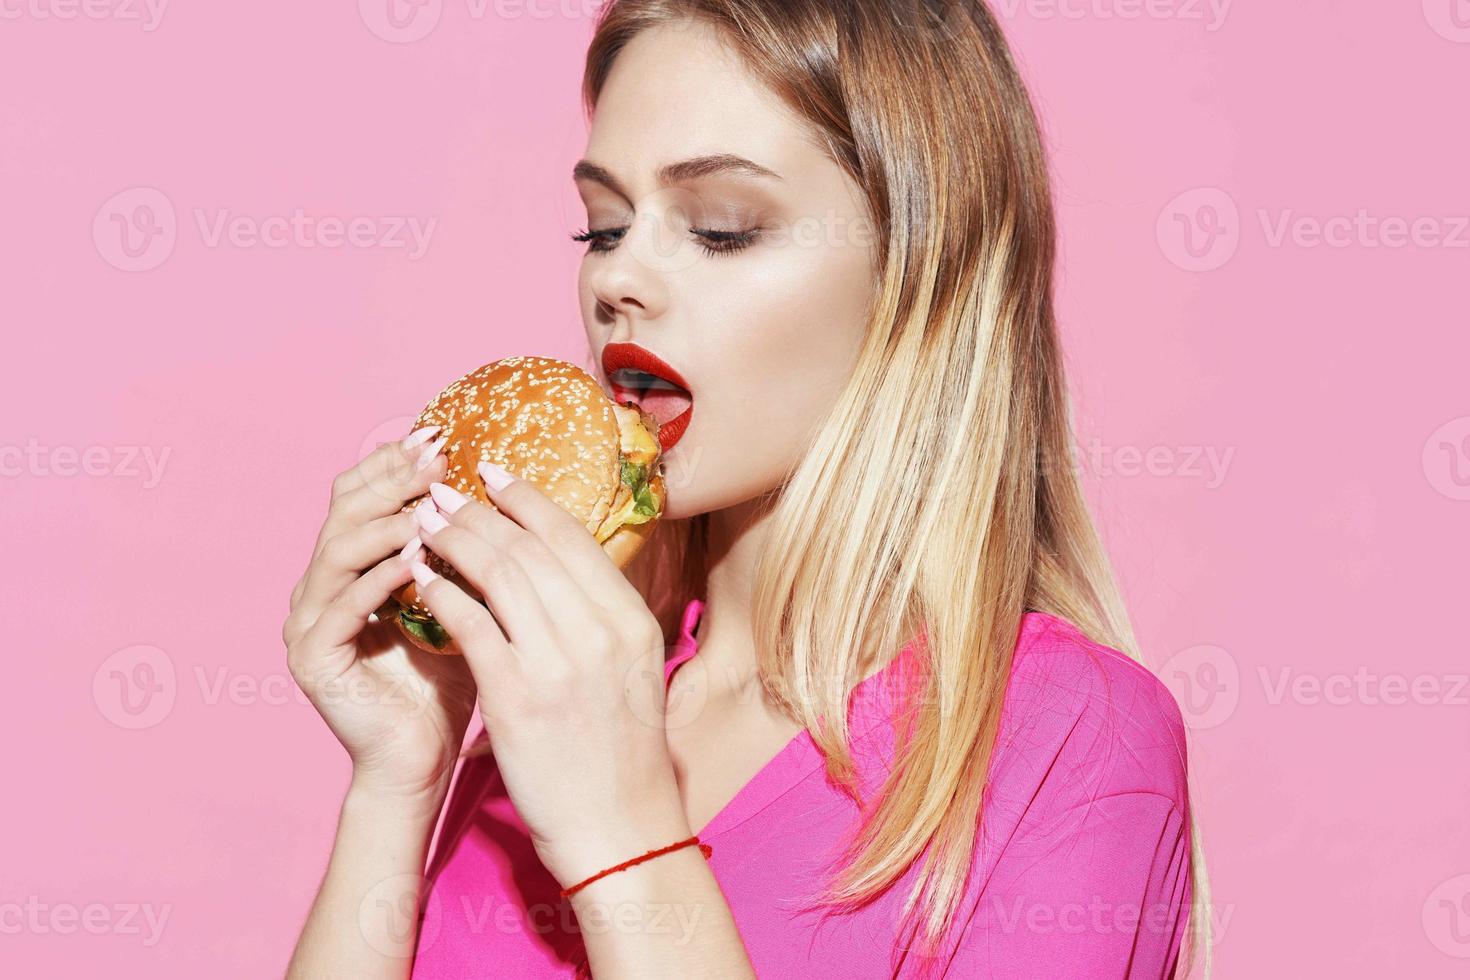 bonita mulher dentro Rosa camisa com Hamburger velozes Comida dieta foto